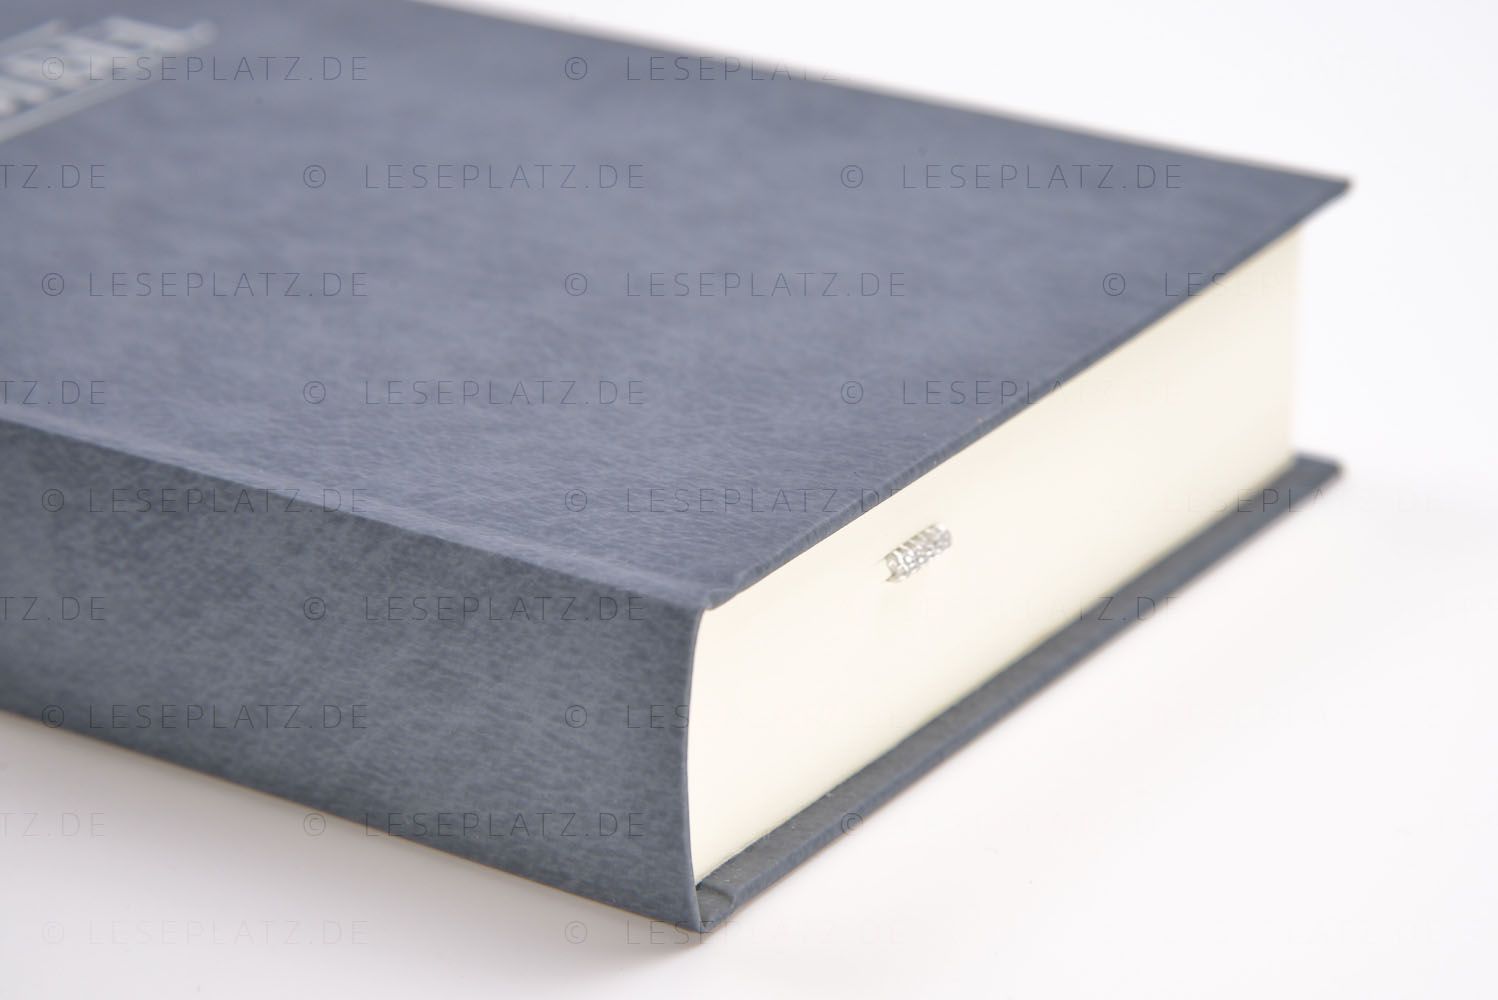 Elberfelder 2003 - Taschenausgabe / Hardcover grau-blau